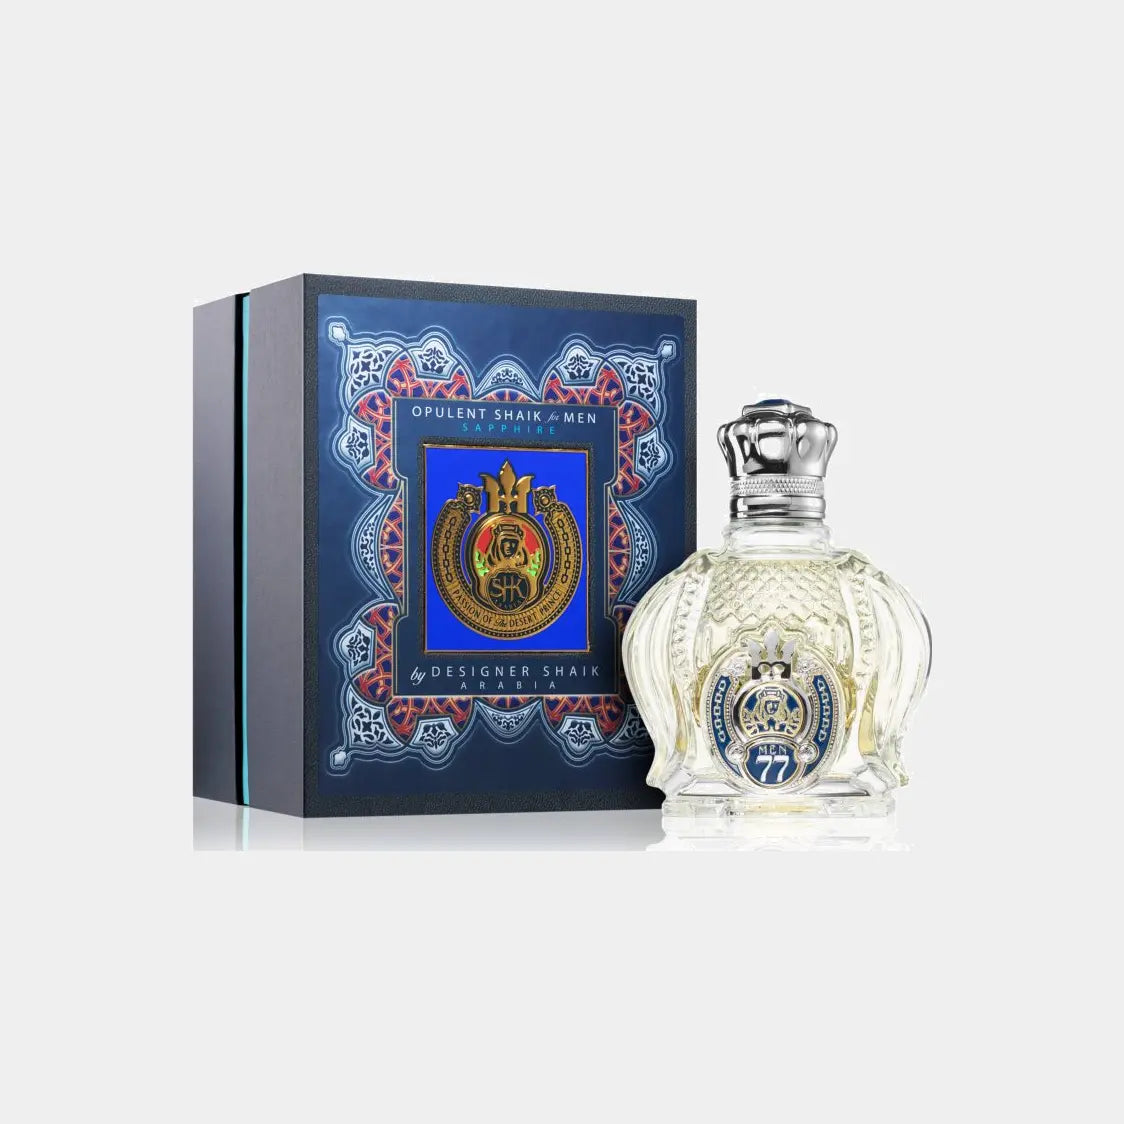 Shaik Opulent Shaik Blue N°77 Eau de parfum - Eau de parfum, МУЖСКИЕ ДУХИ